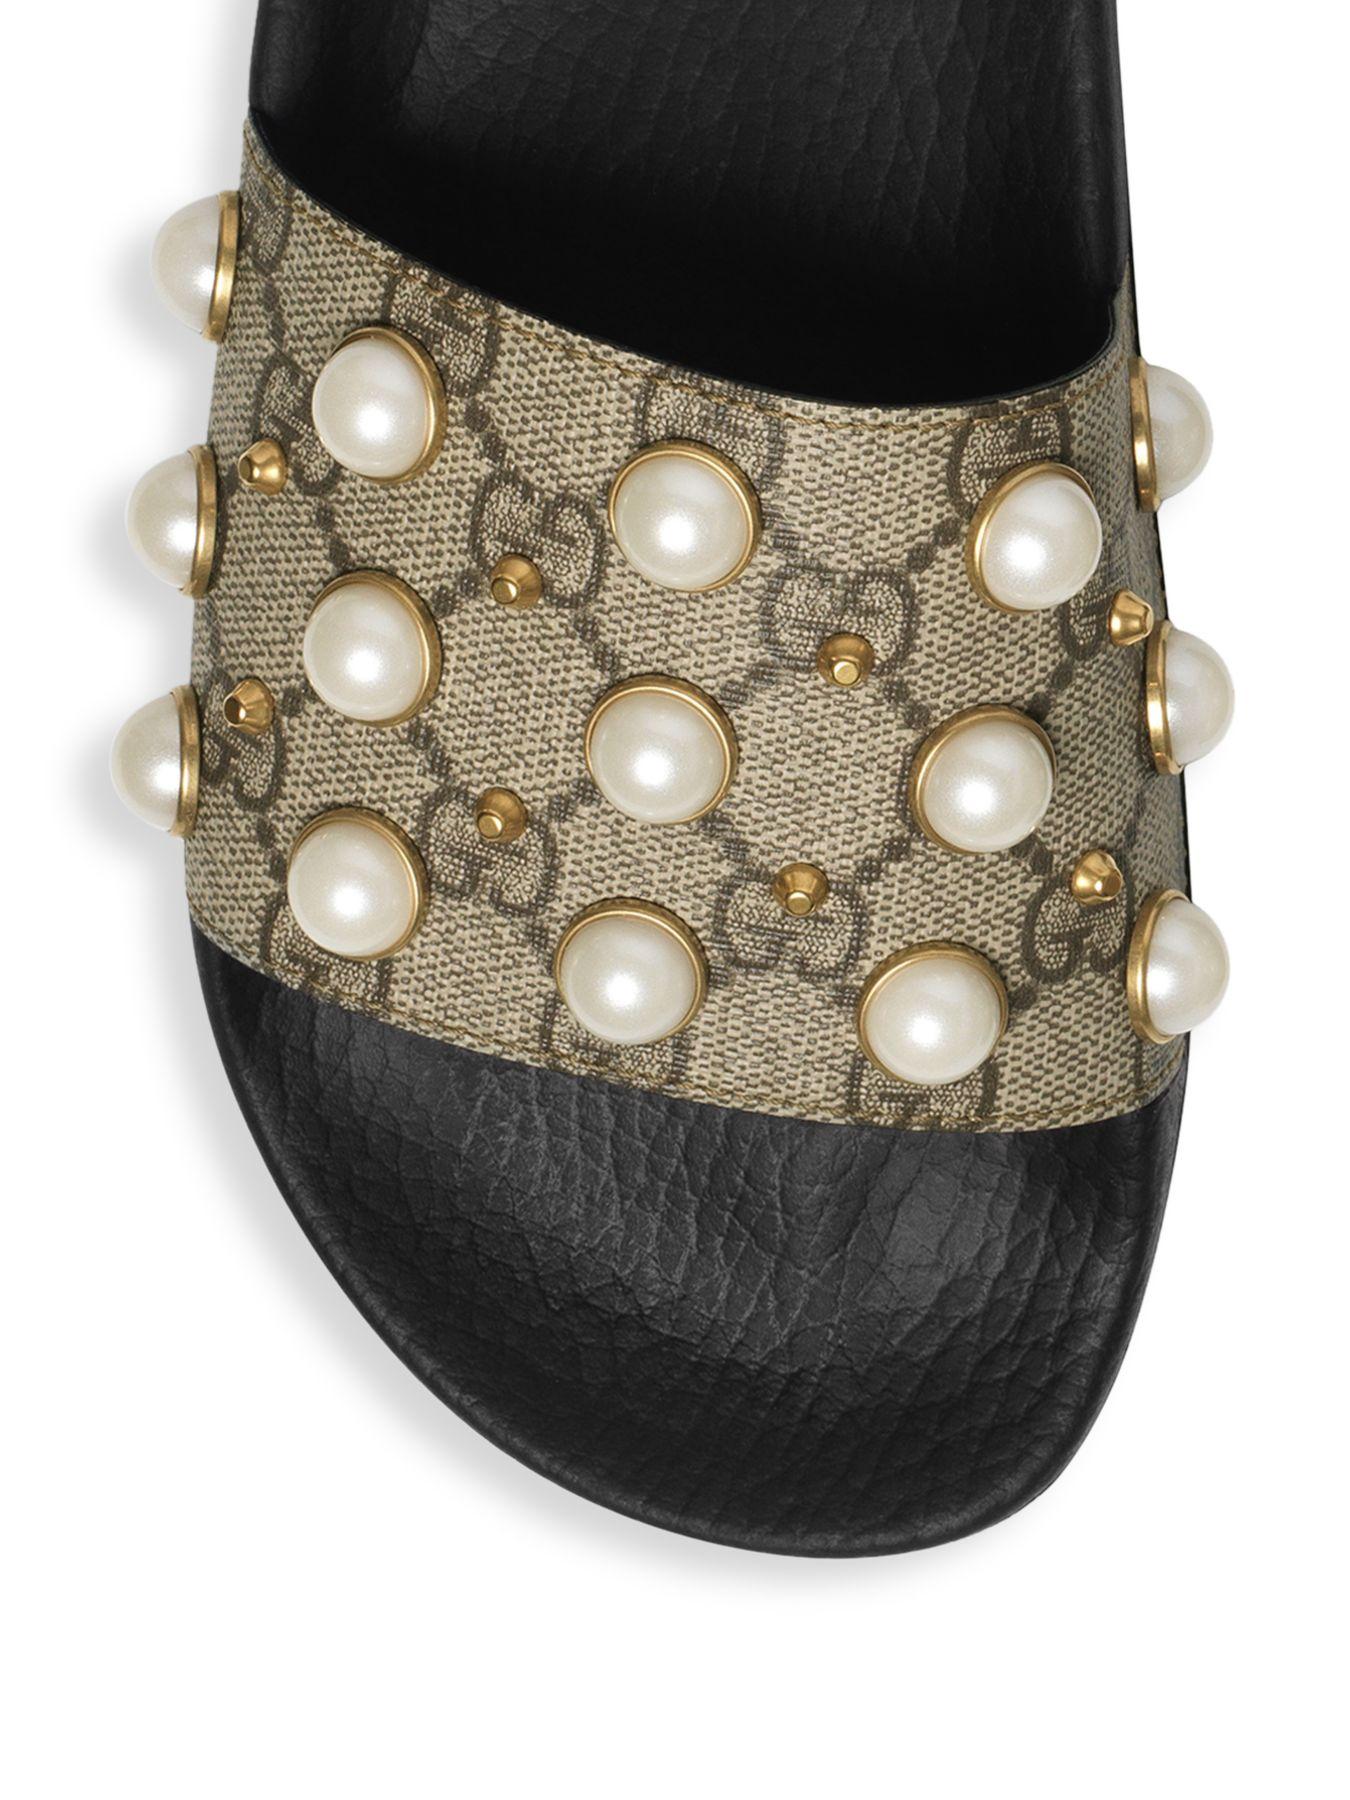 Gucci Slides With Pearls : Gucci Gg Supreme Monogram Pearls Slide ...